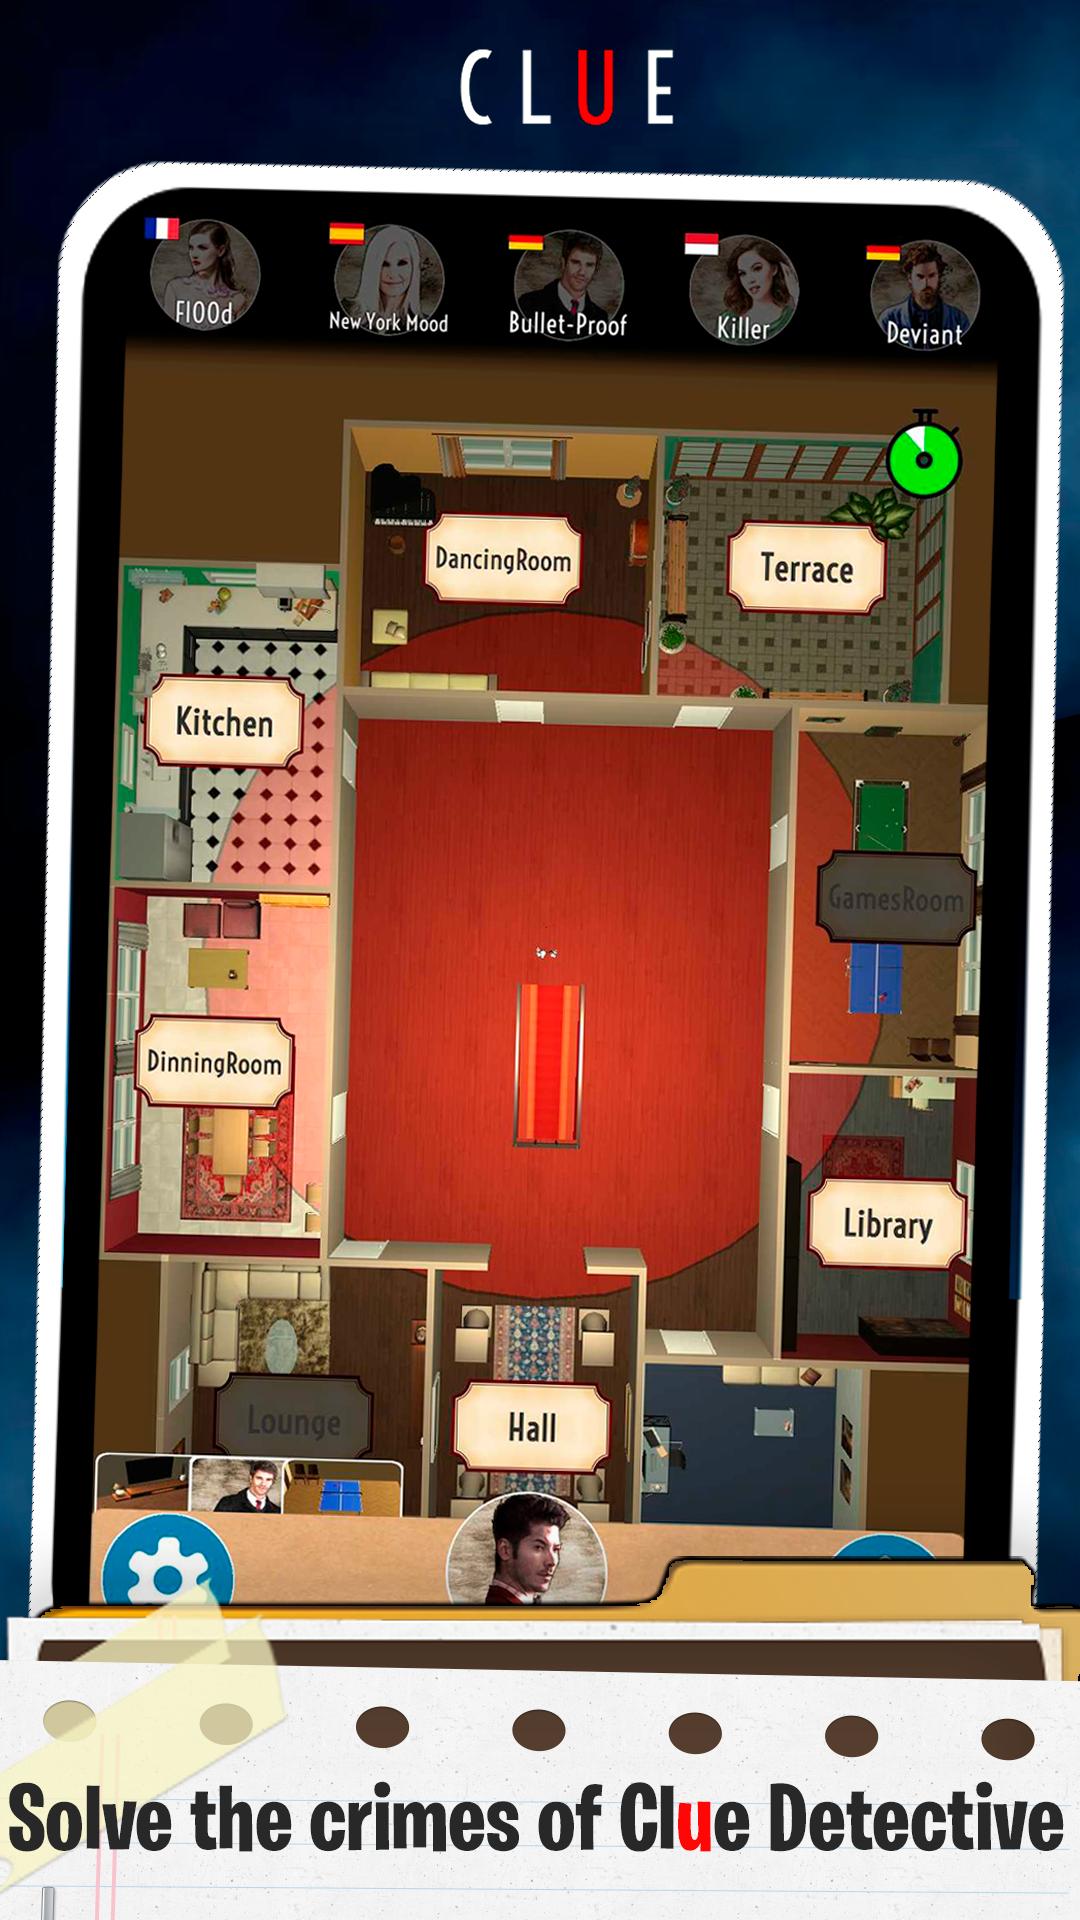 Clue Detective mystery murder criminal board game 2.3 Screenshot 1